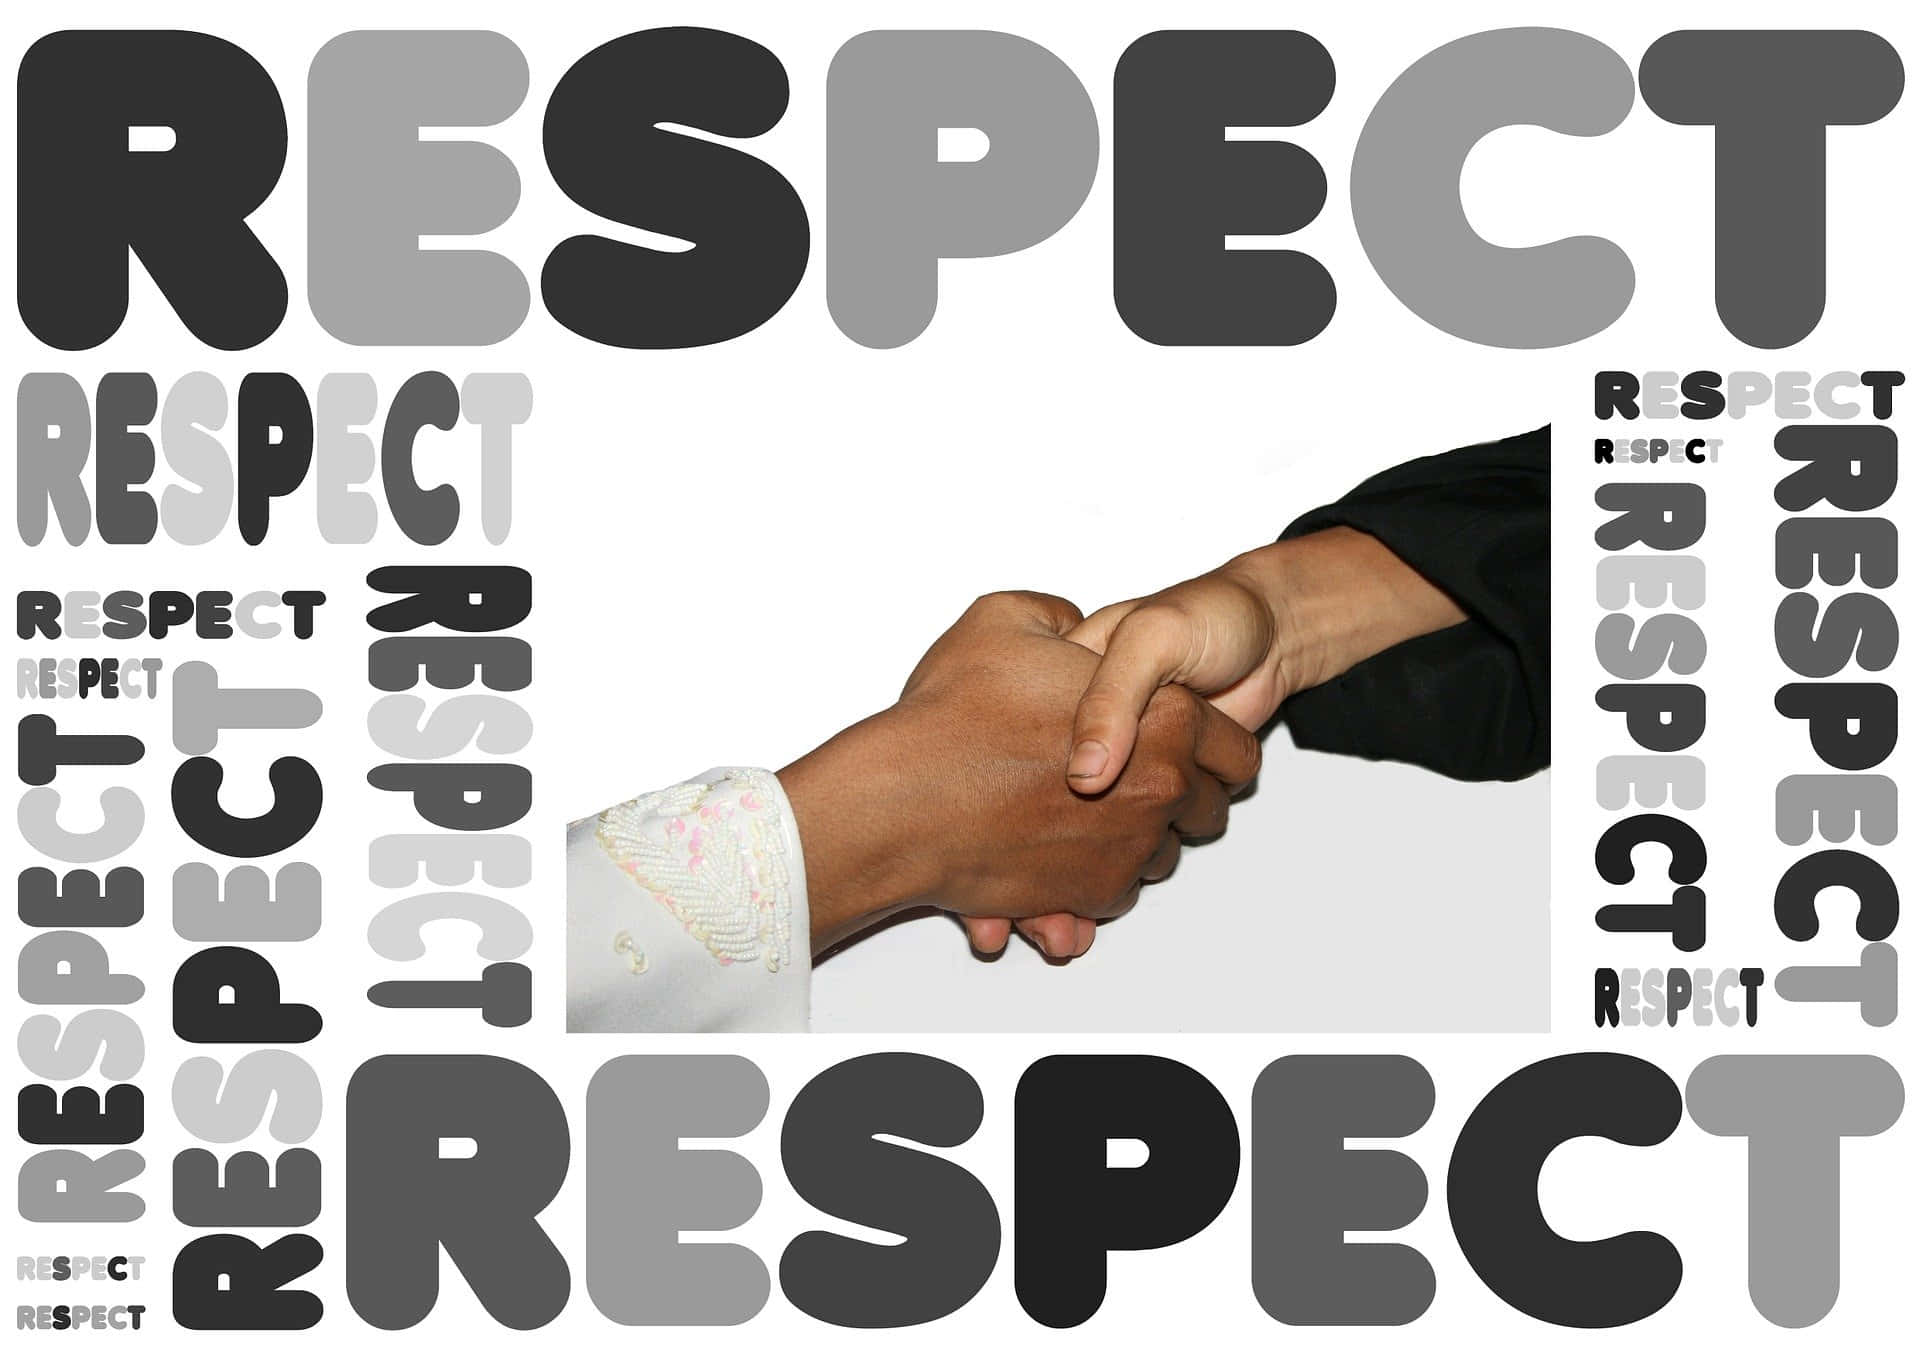 A Visual Representation of Respect